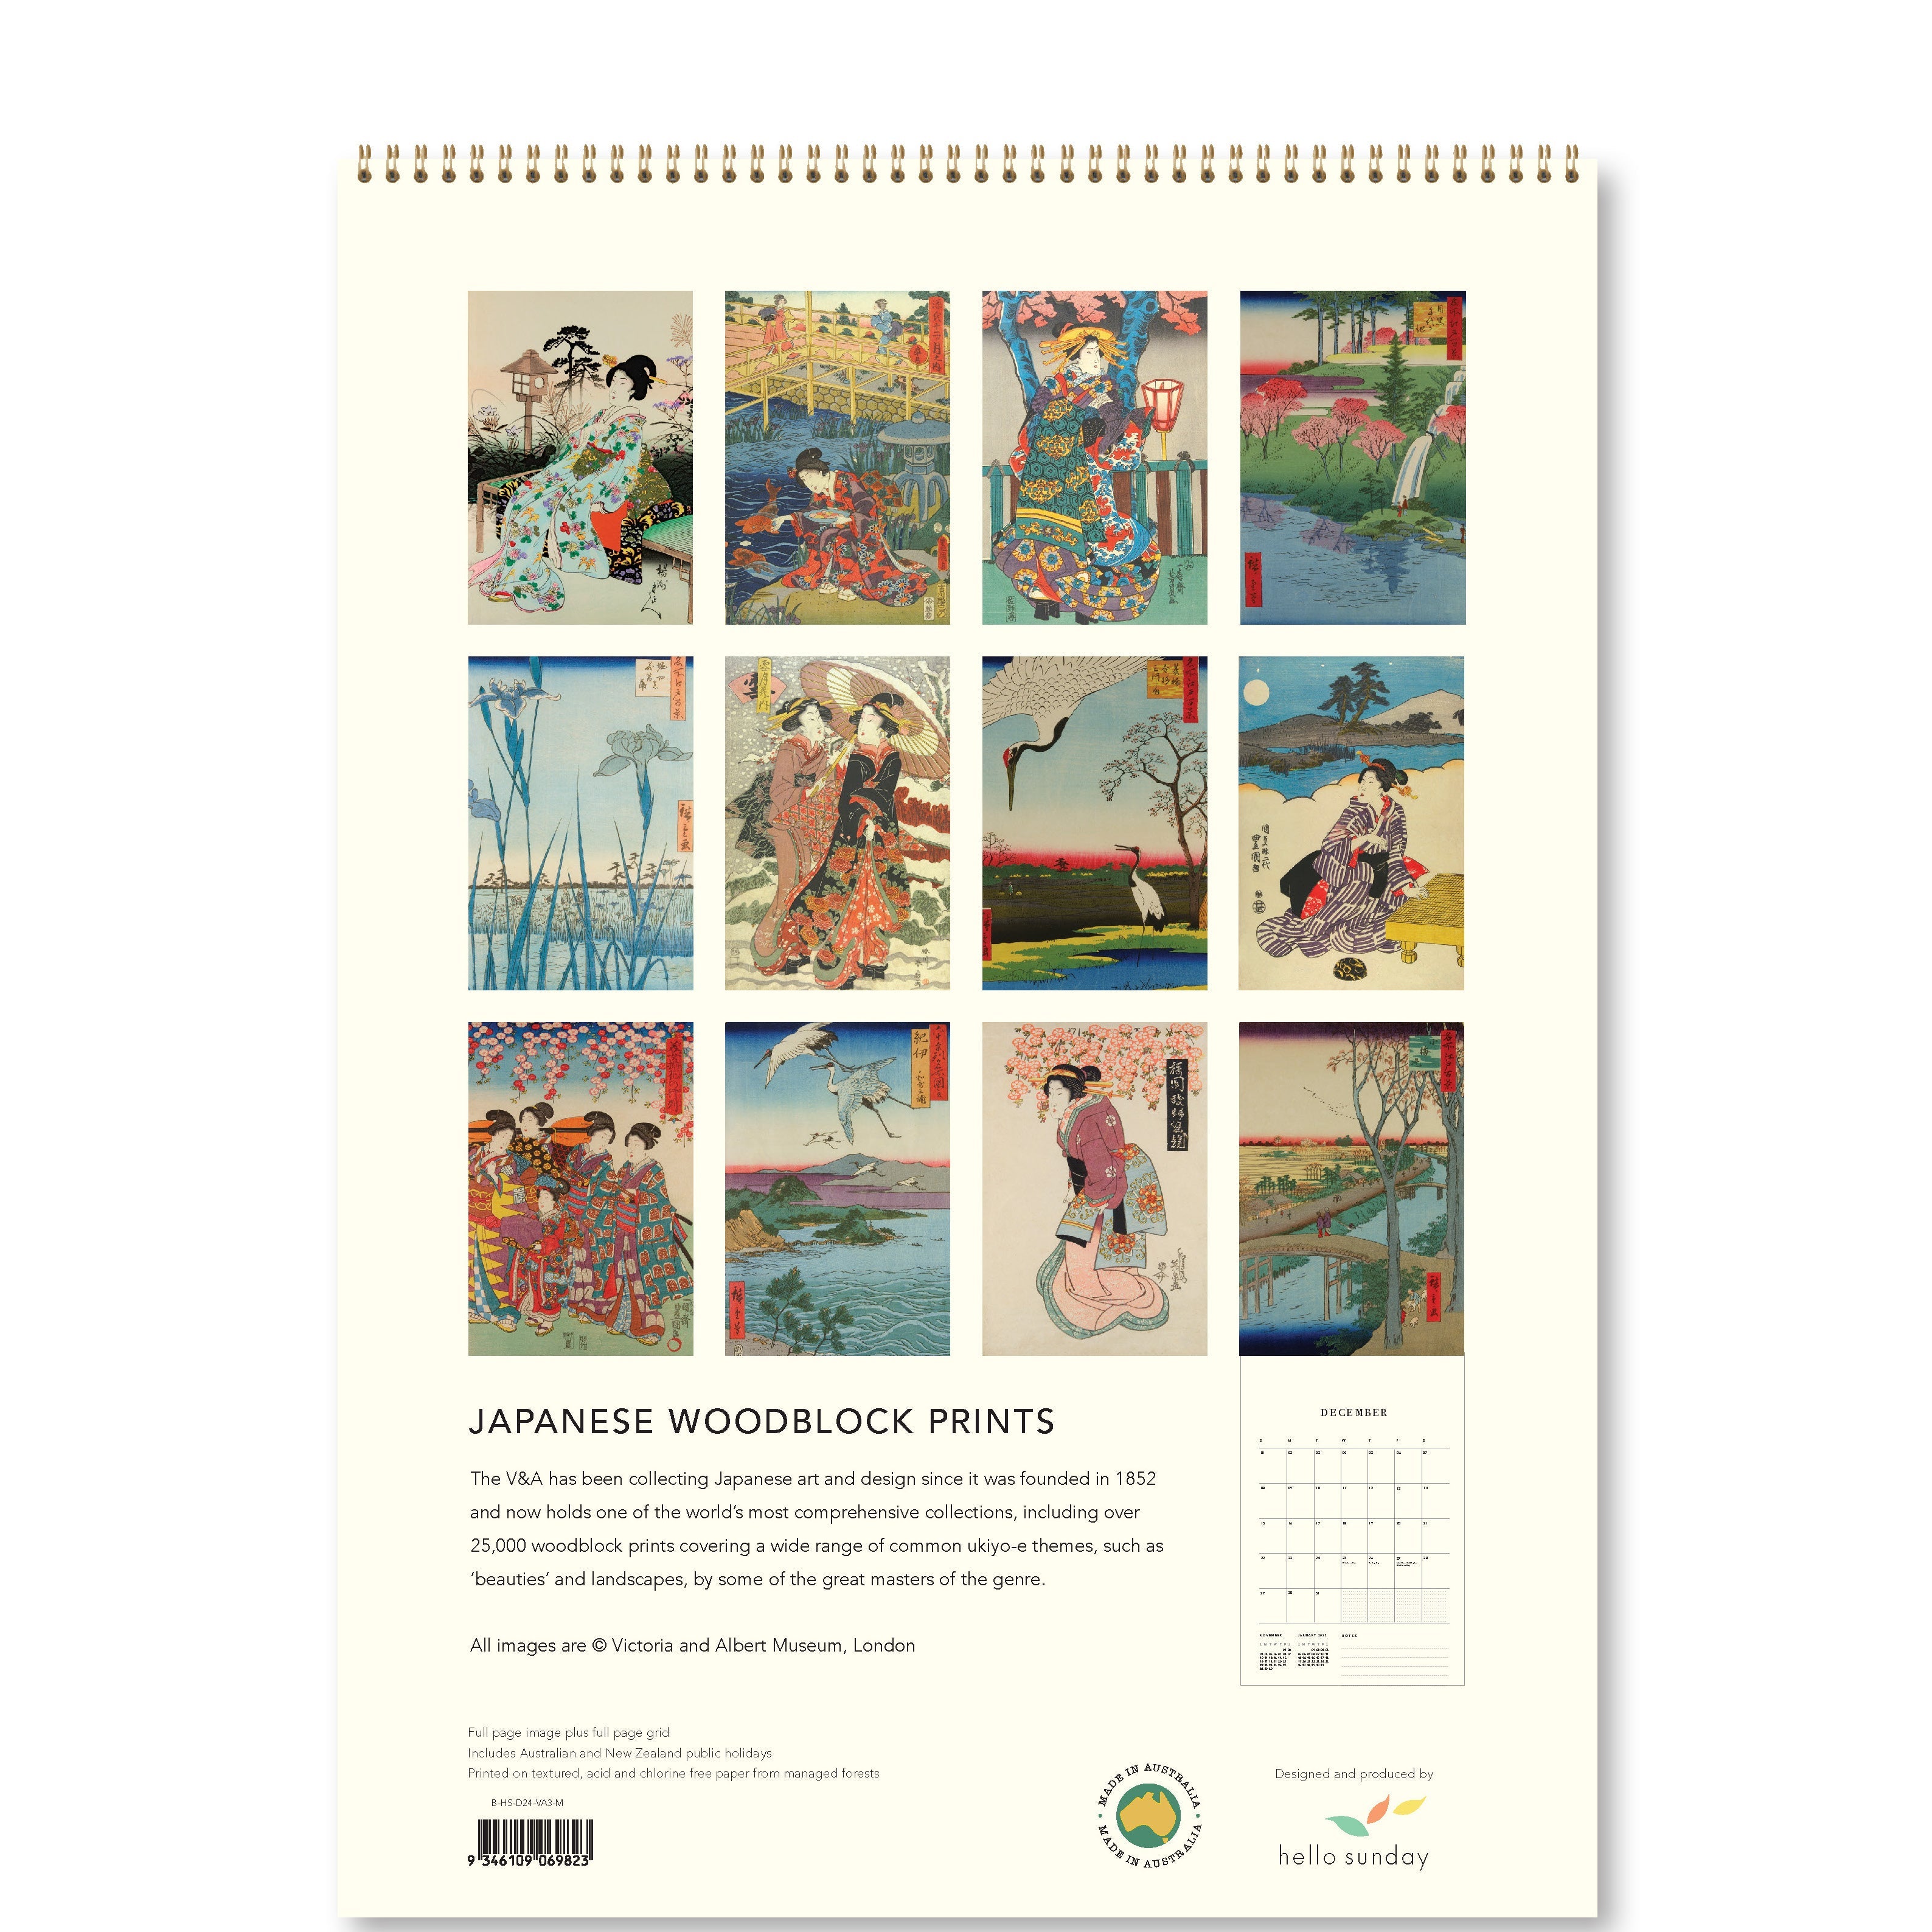 2024 Japanese Woodblock Prints Deluxe Wall Calendar Art Calendars